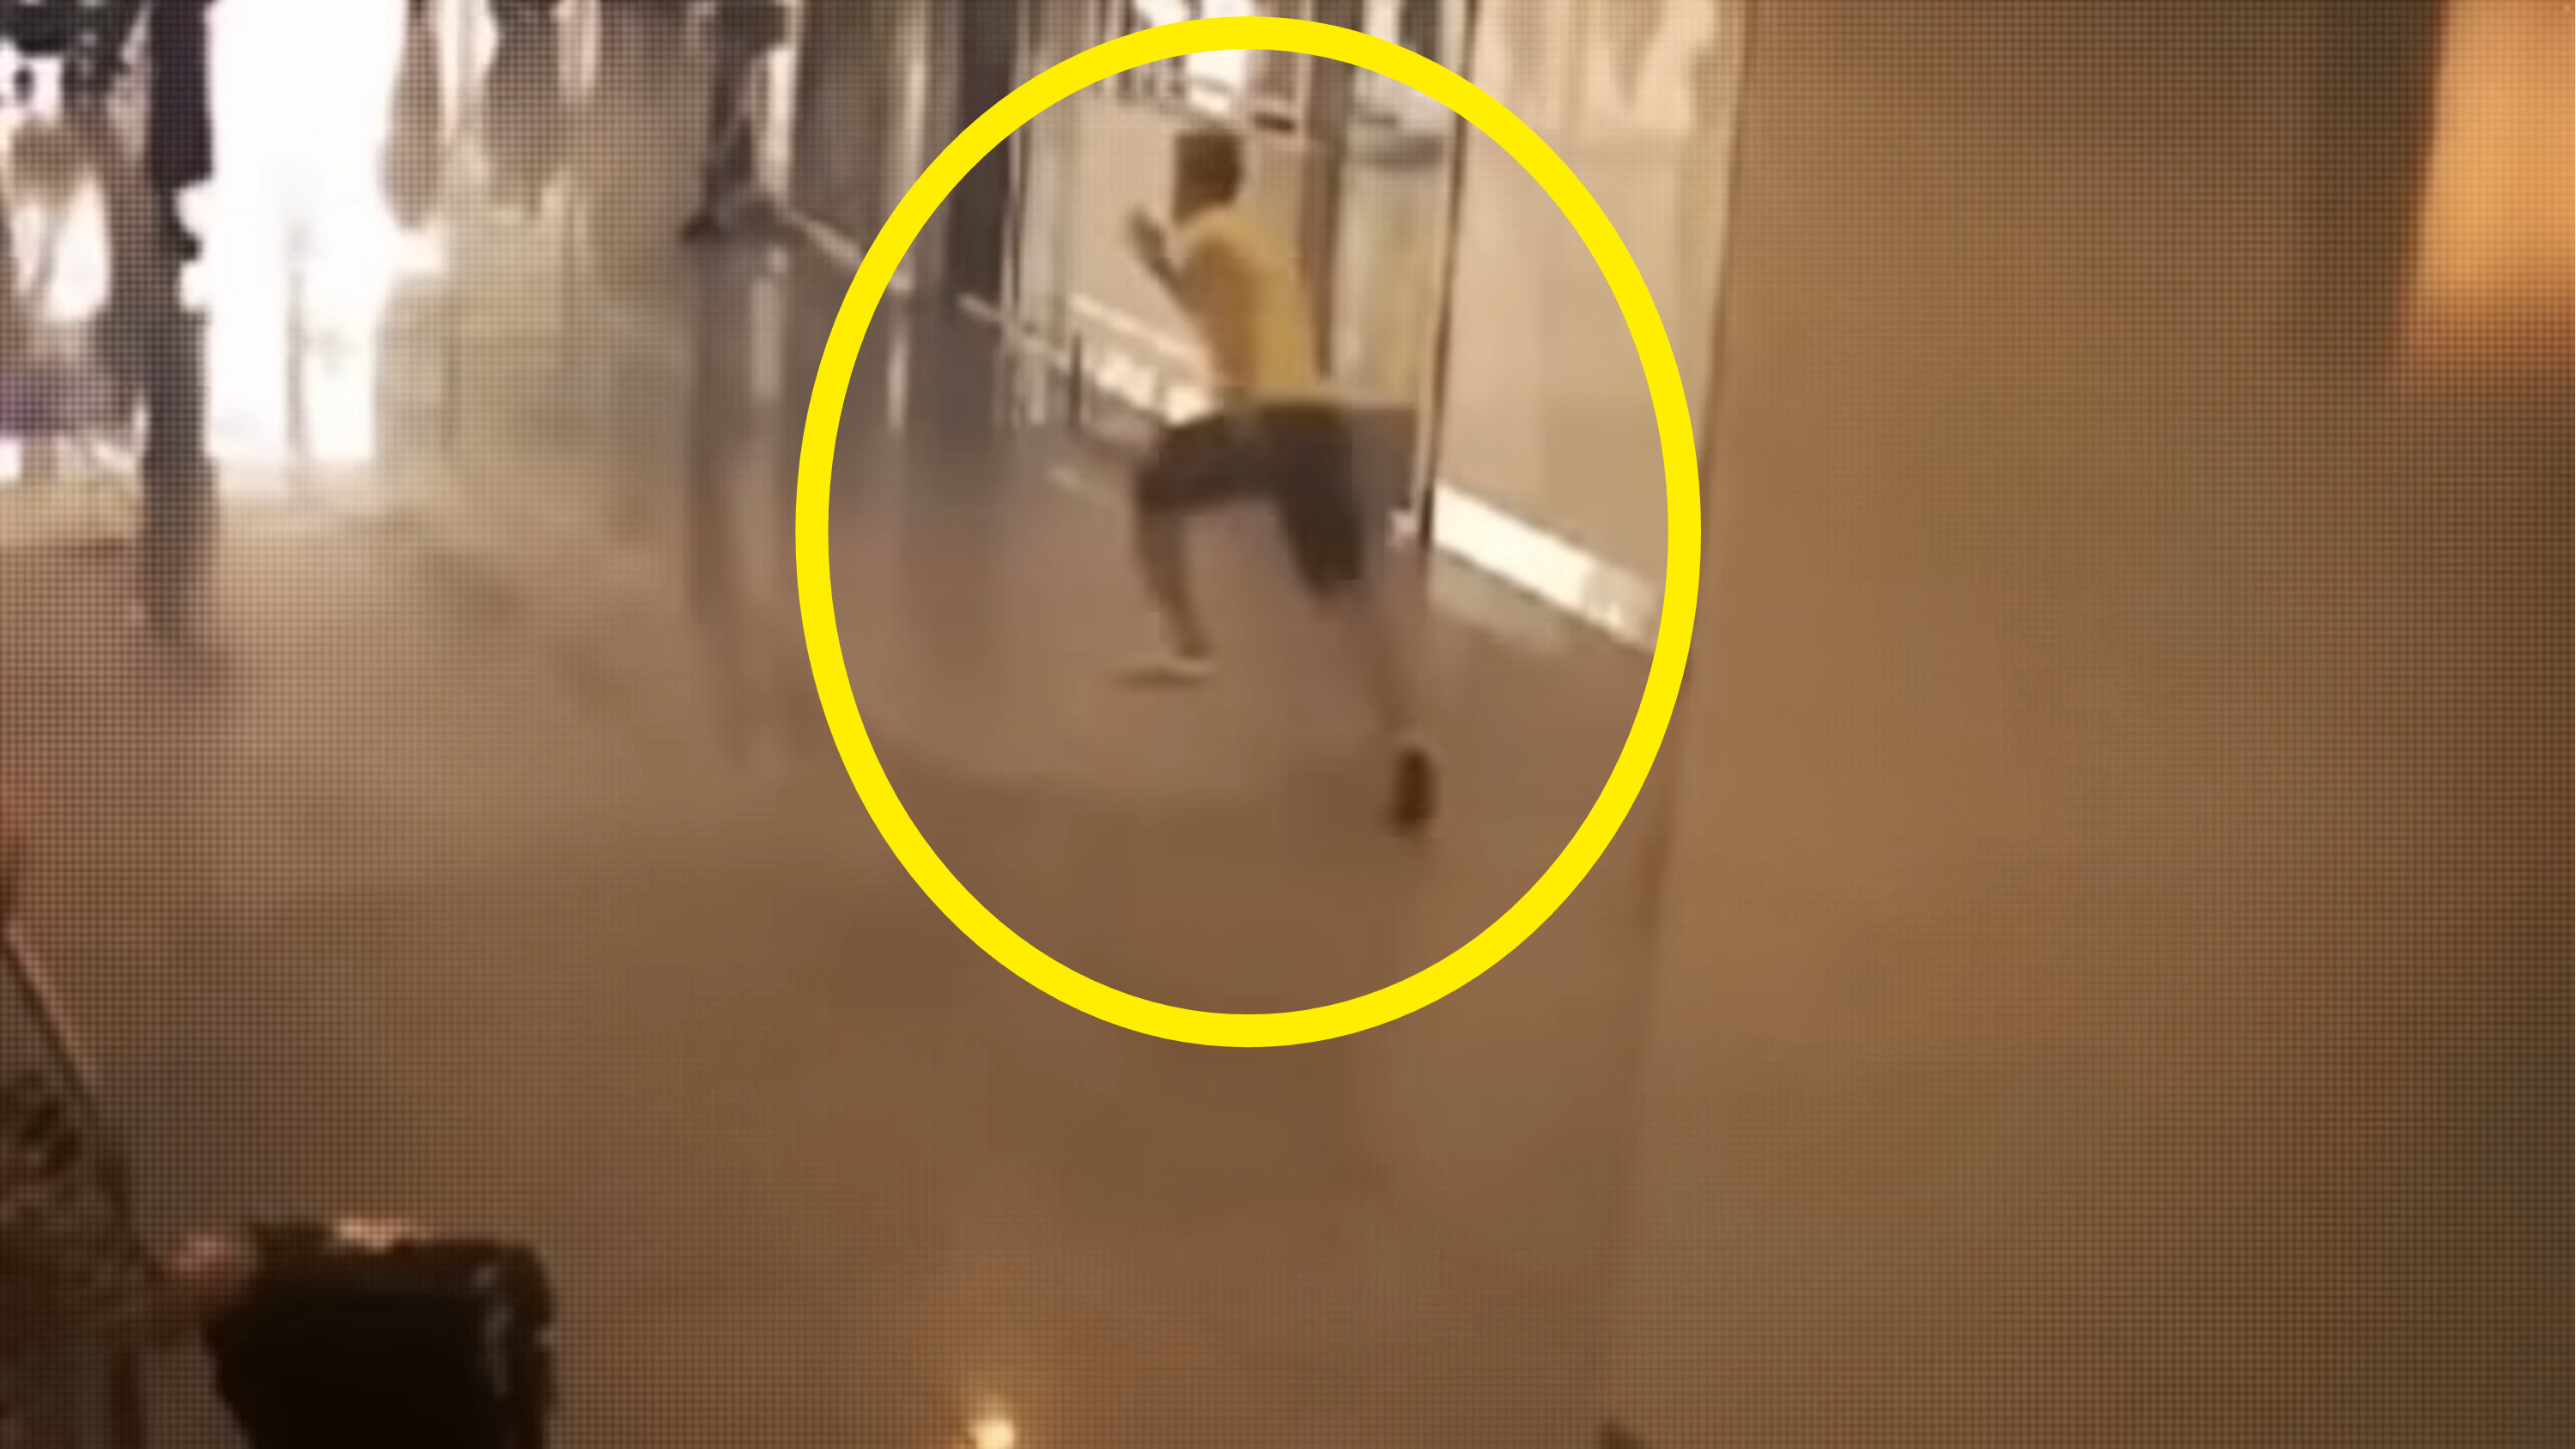 CCTV footage of Lars running down the hallway